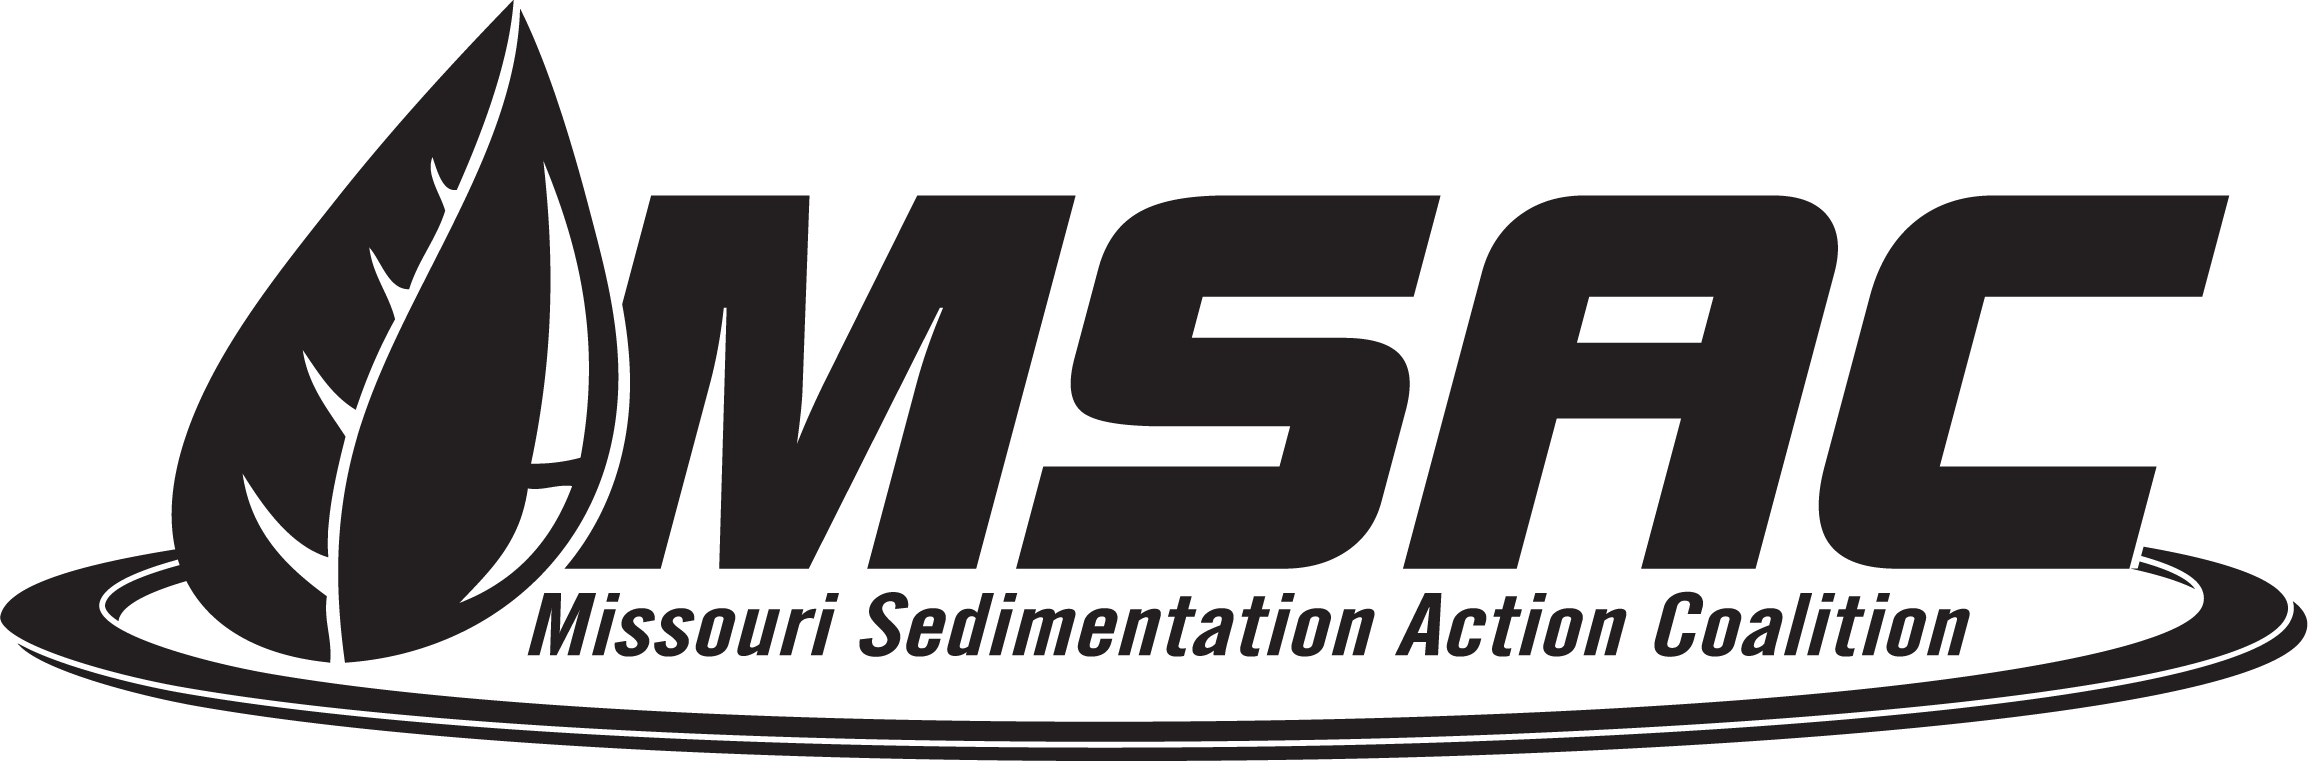 Missouri Sedimentation Action Coalition